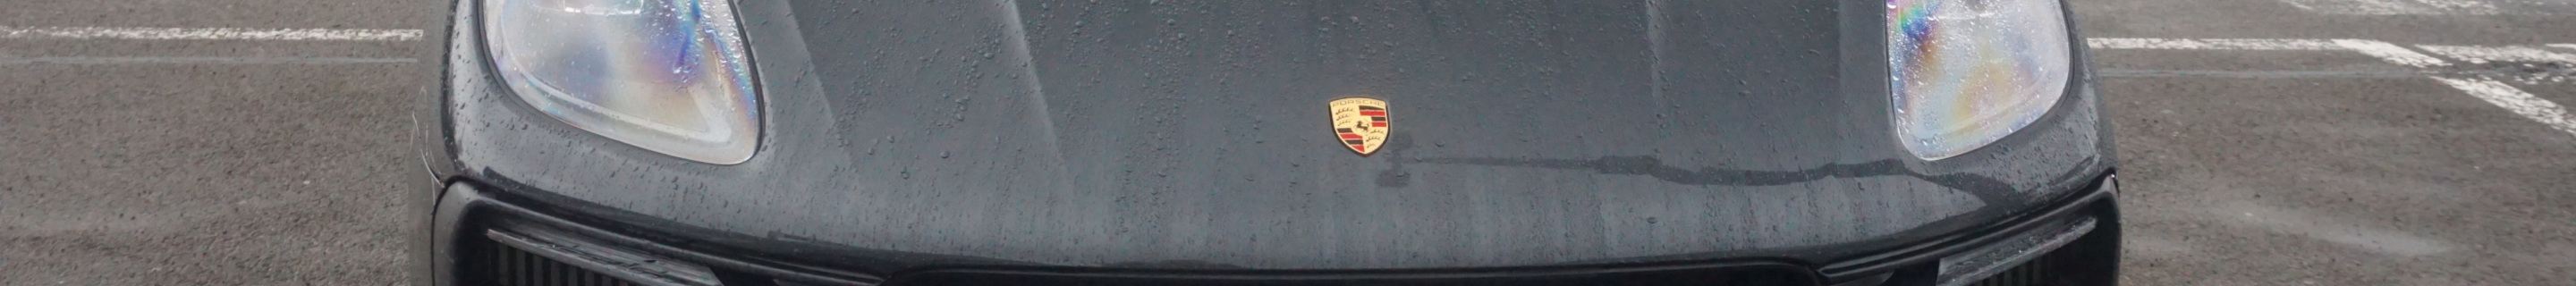 Porsche 95B Macan GTS MkIII